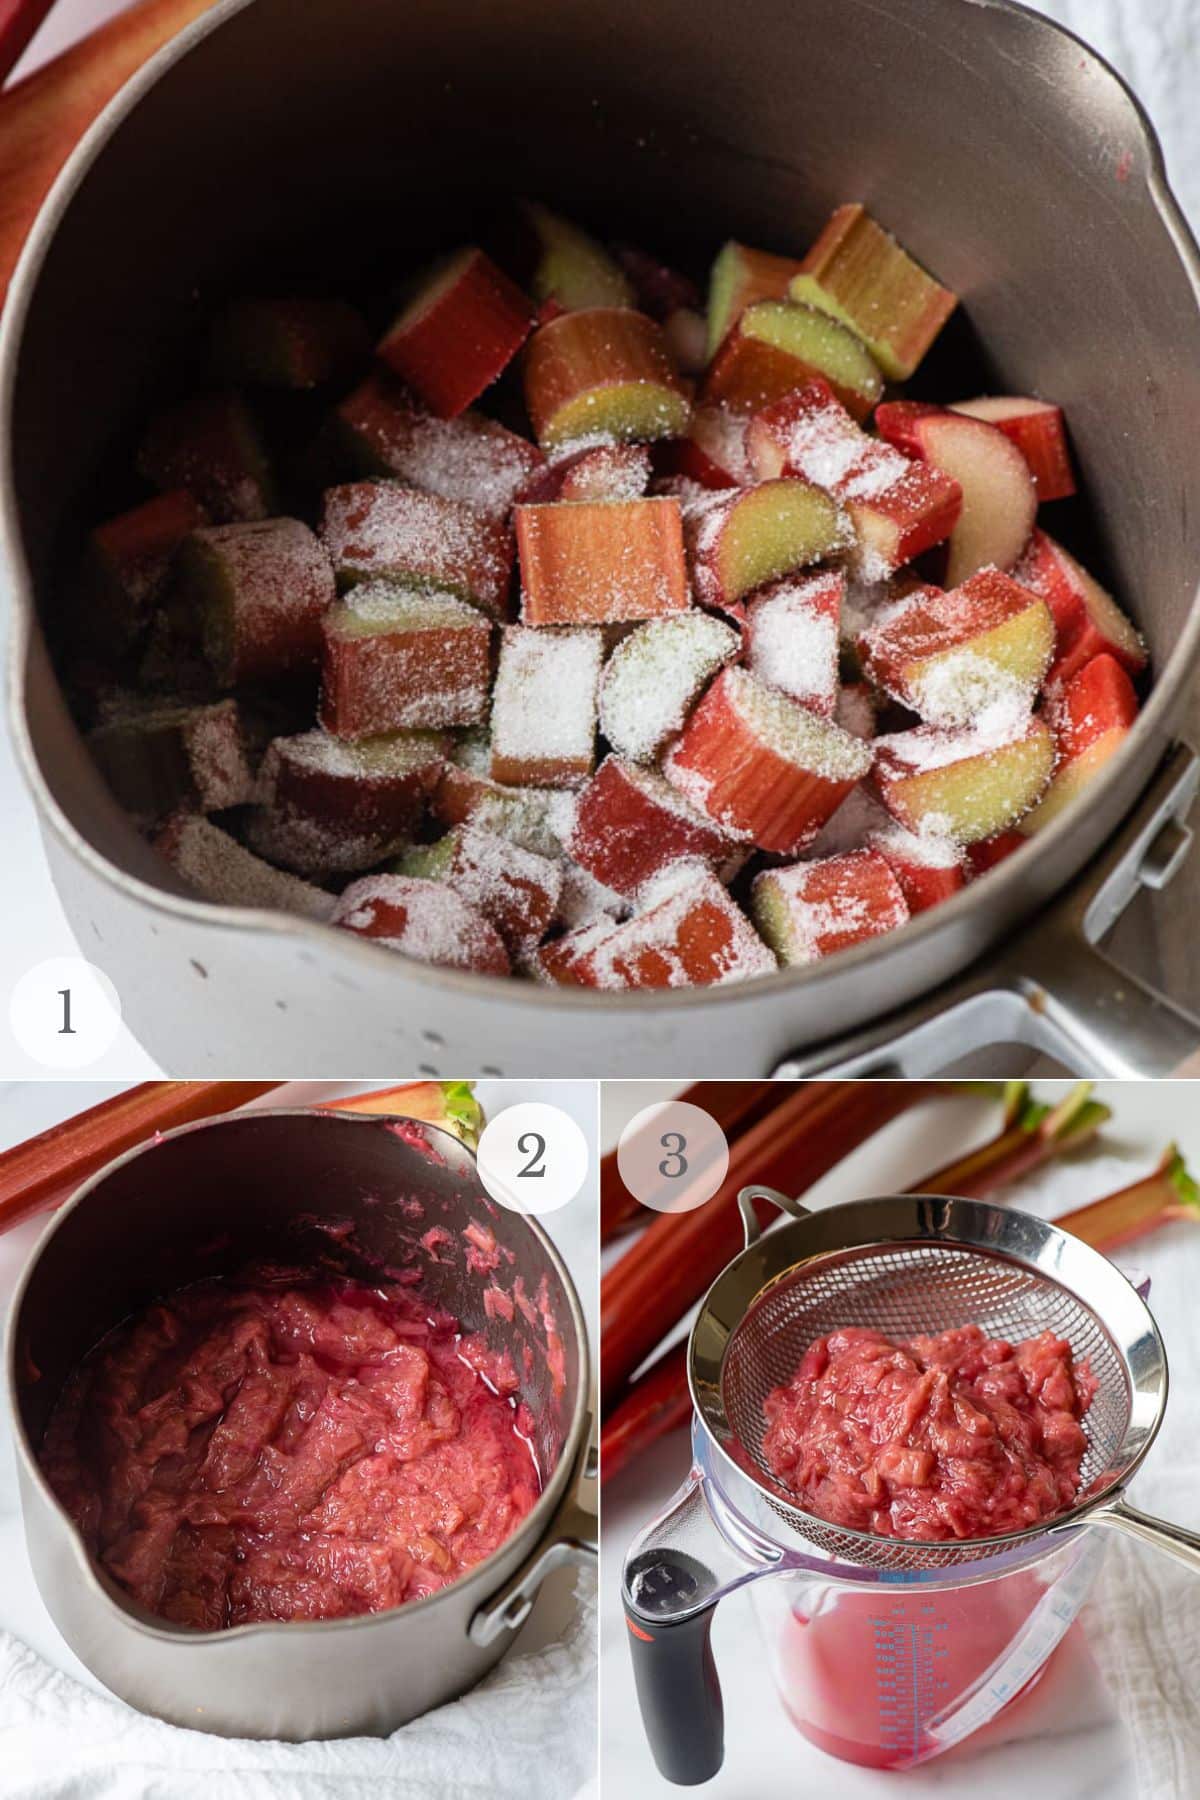 rhubarb fool recipe steps 1-3.